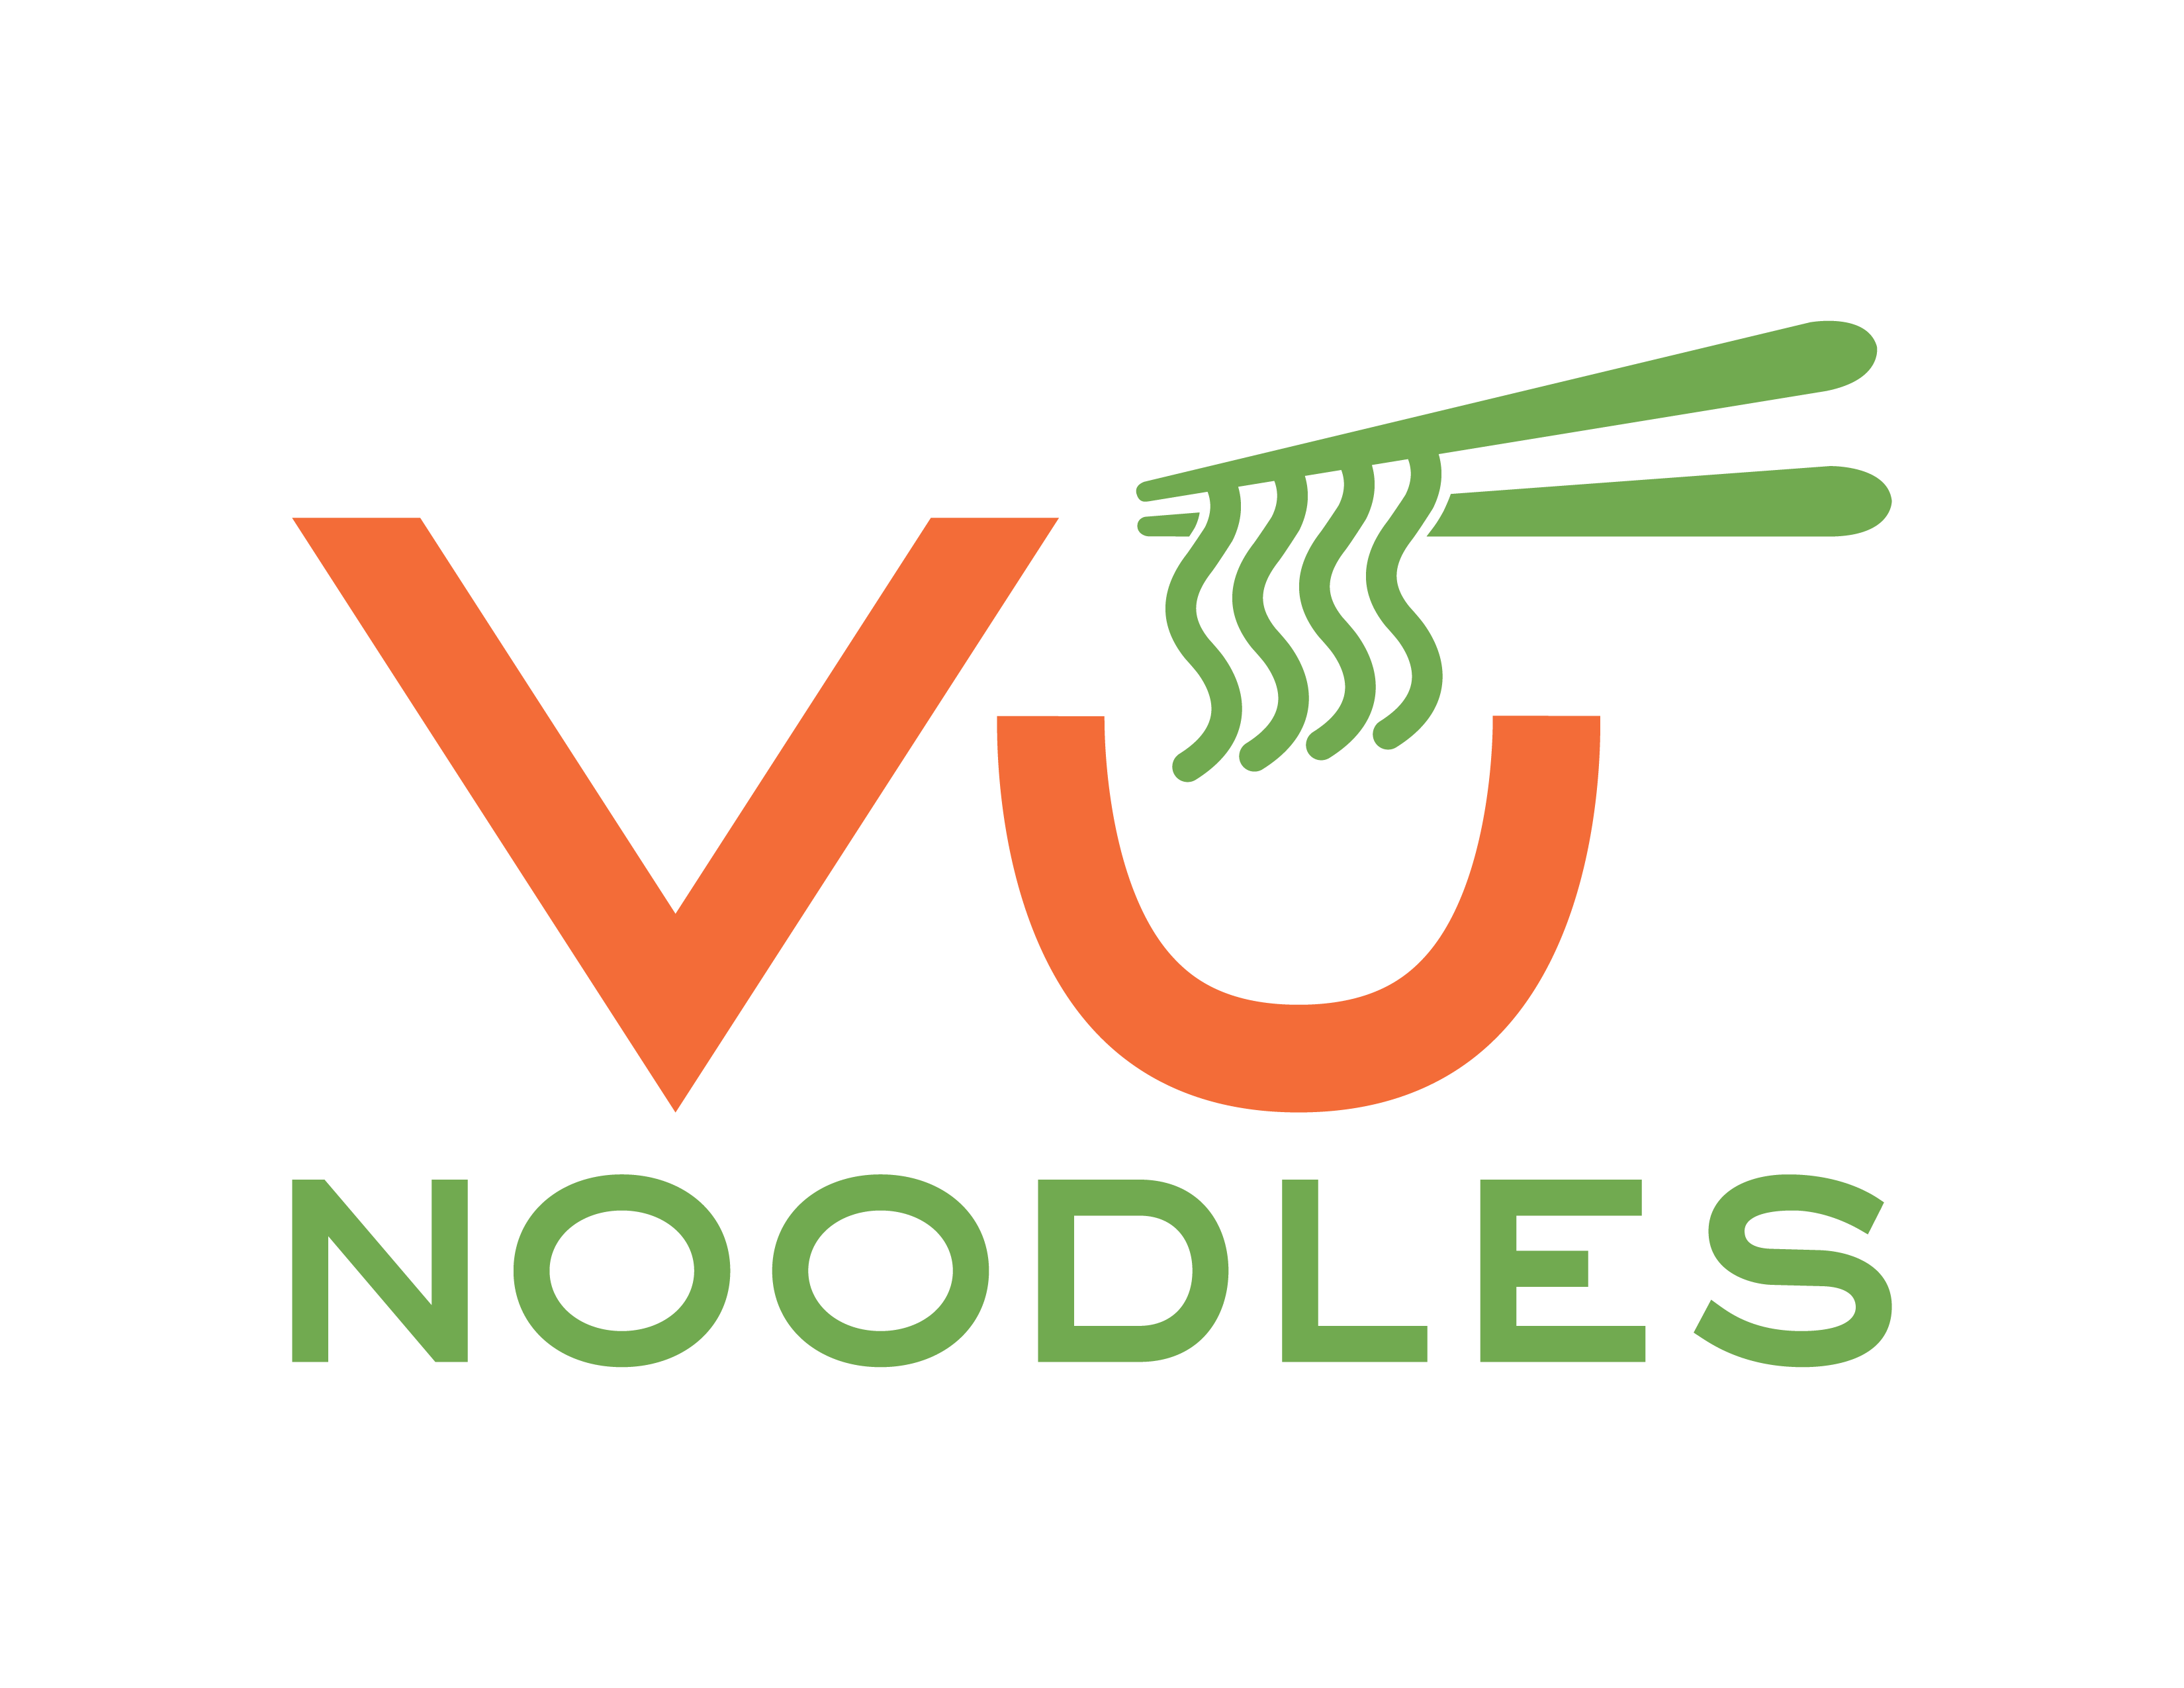 Vu Noodles